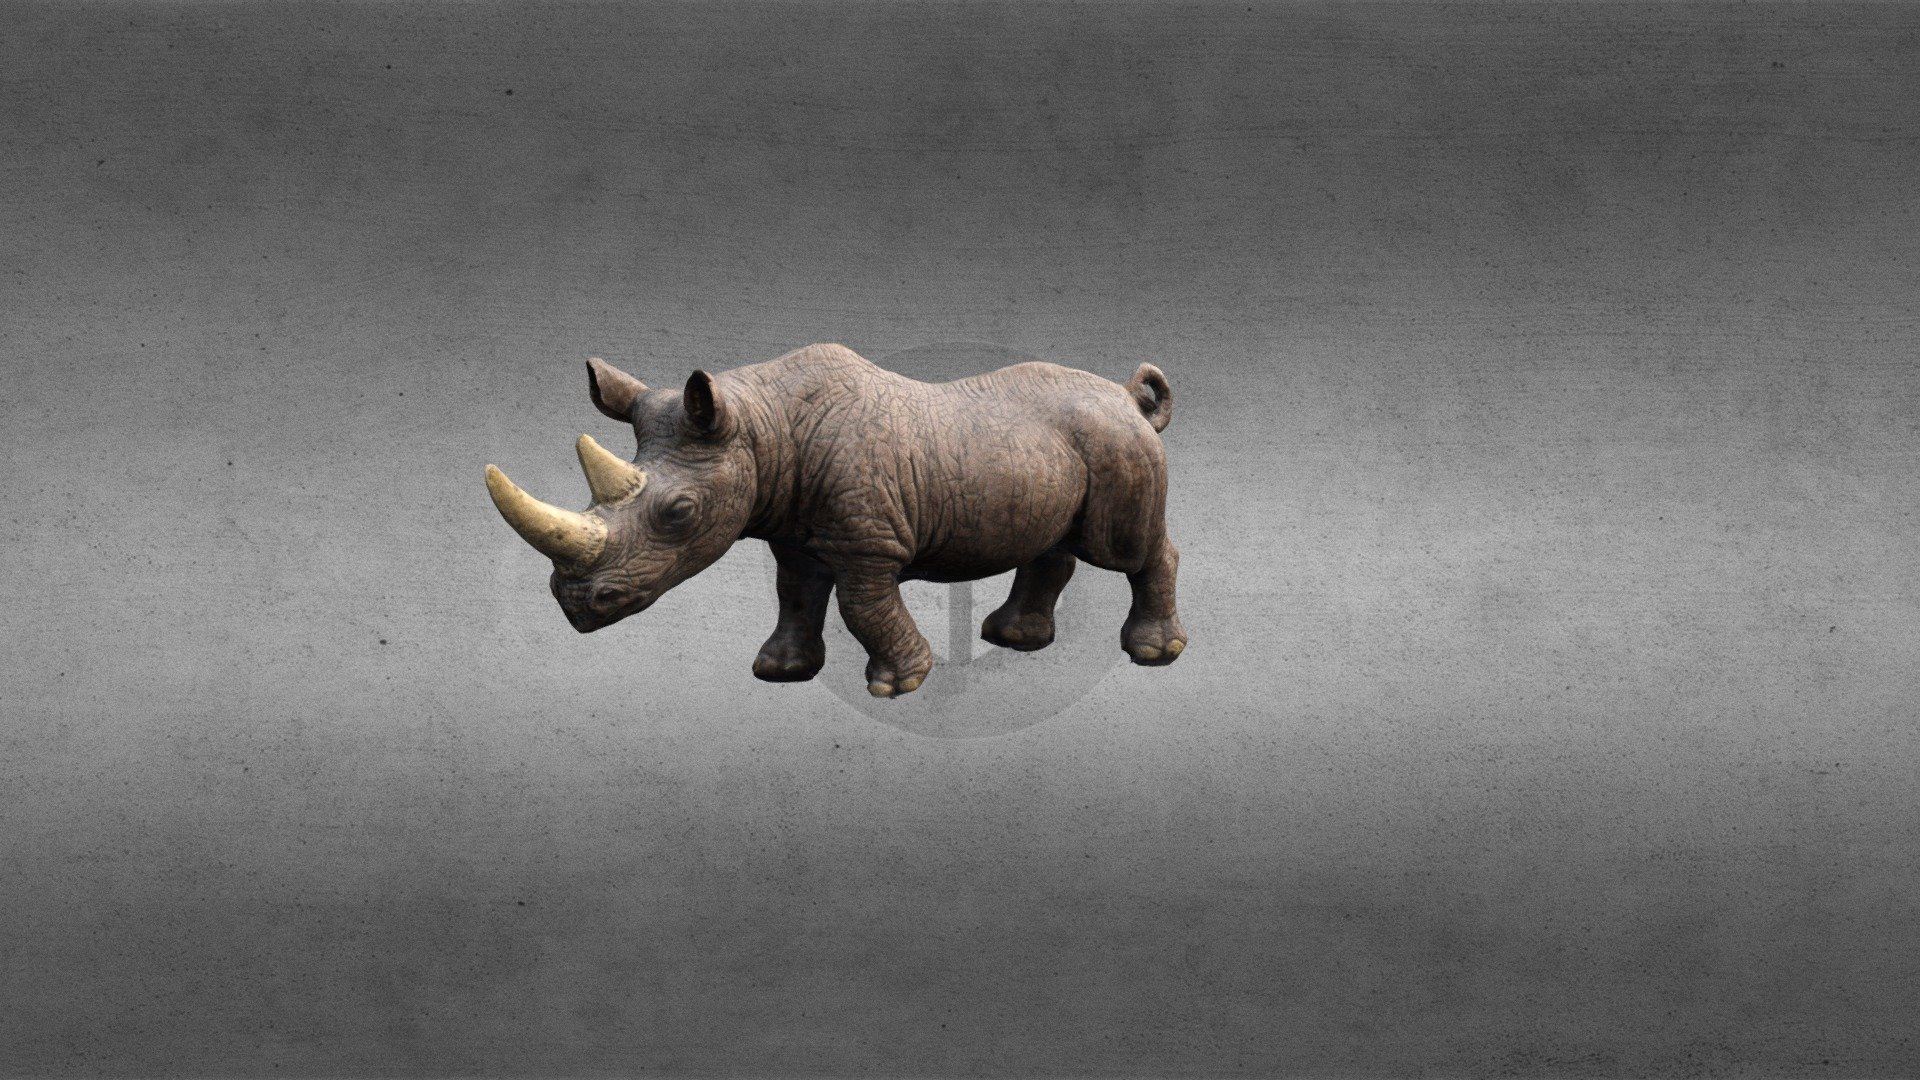 downloading Rhinoceros 3D 7.30.23163.13001